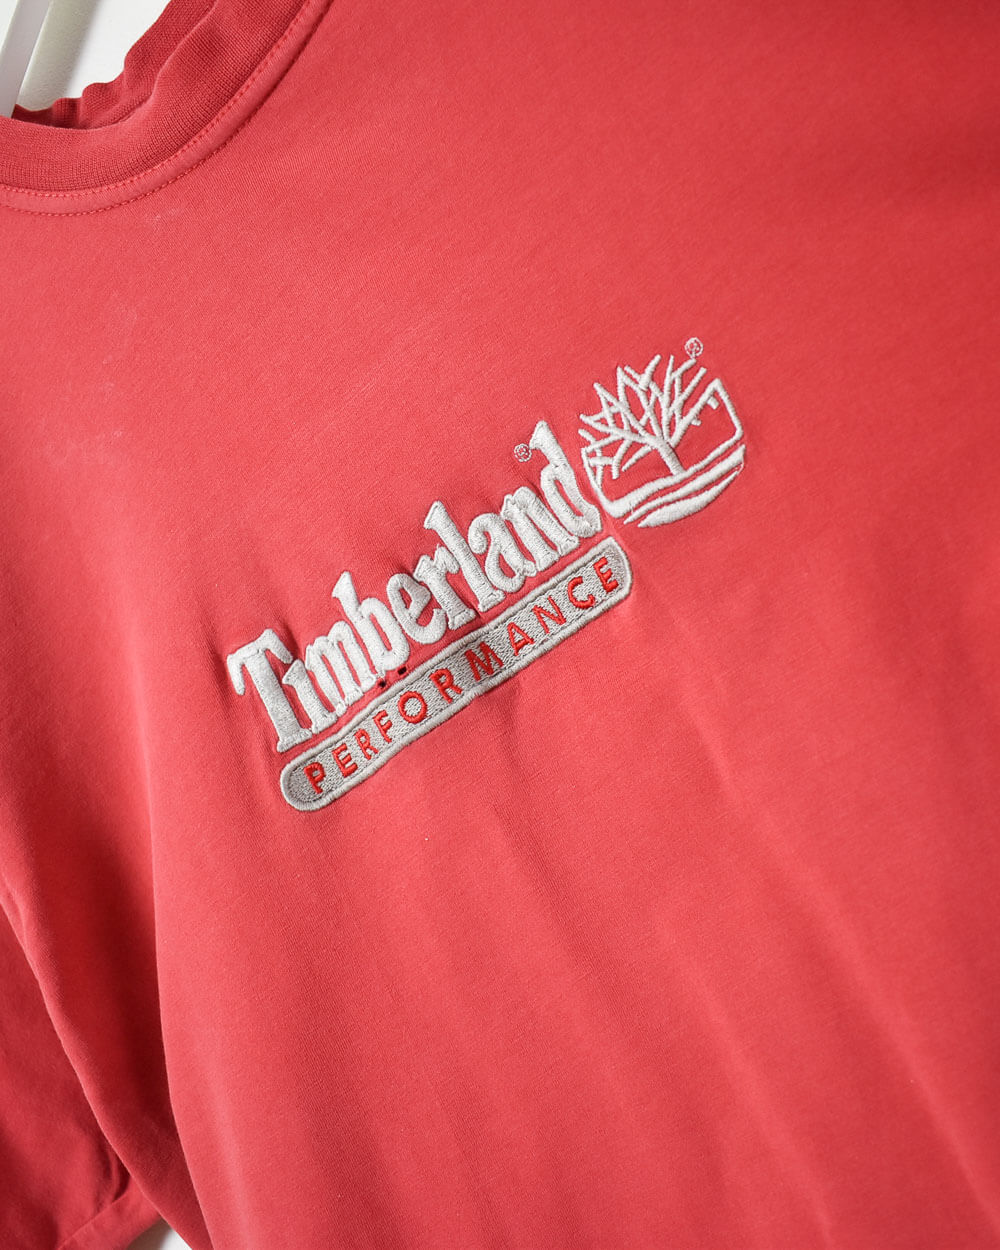 Red Timberland Performance T-Shirt - Medium